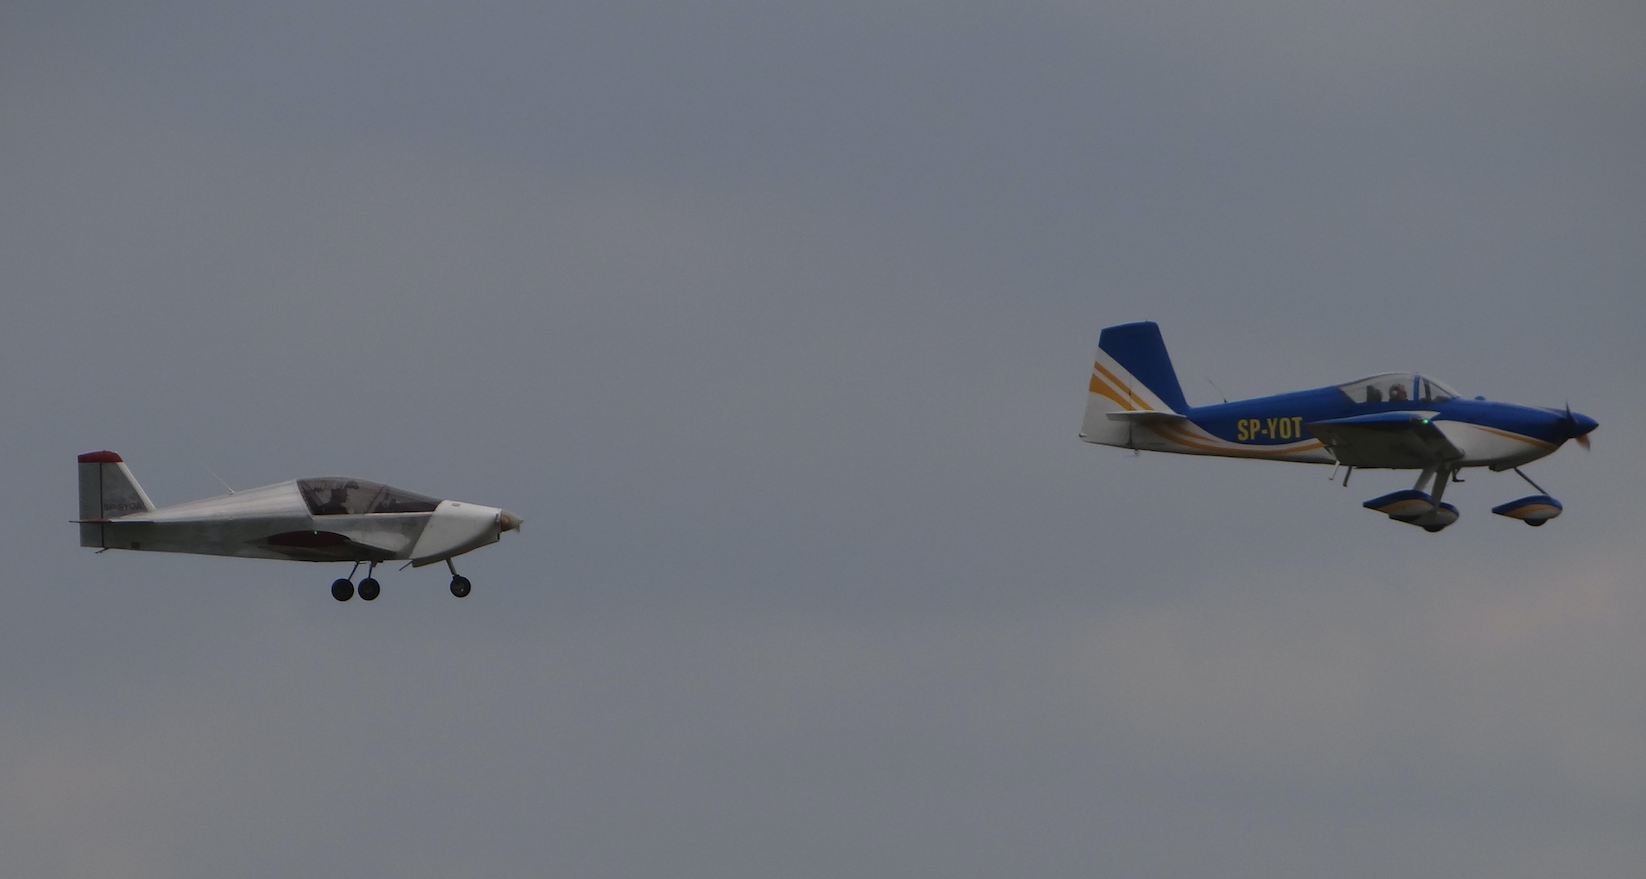 Samolot Sonex rejestracja SP-SYOA. Samolot VansR7 rejestracja SP-YOT. 2023 rok. Zdjęcie Karol Placha Hetman